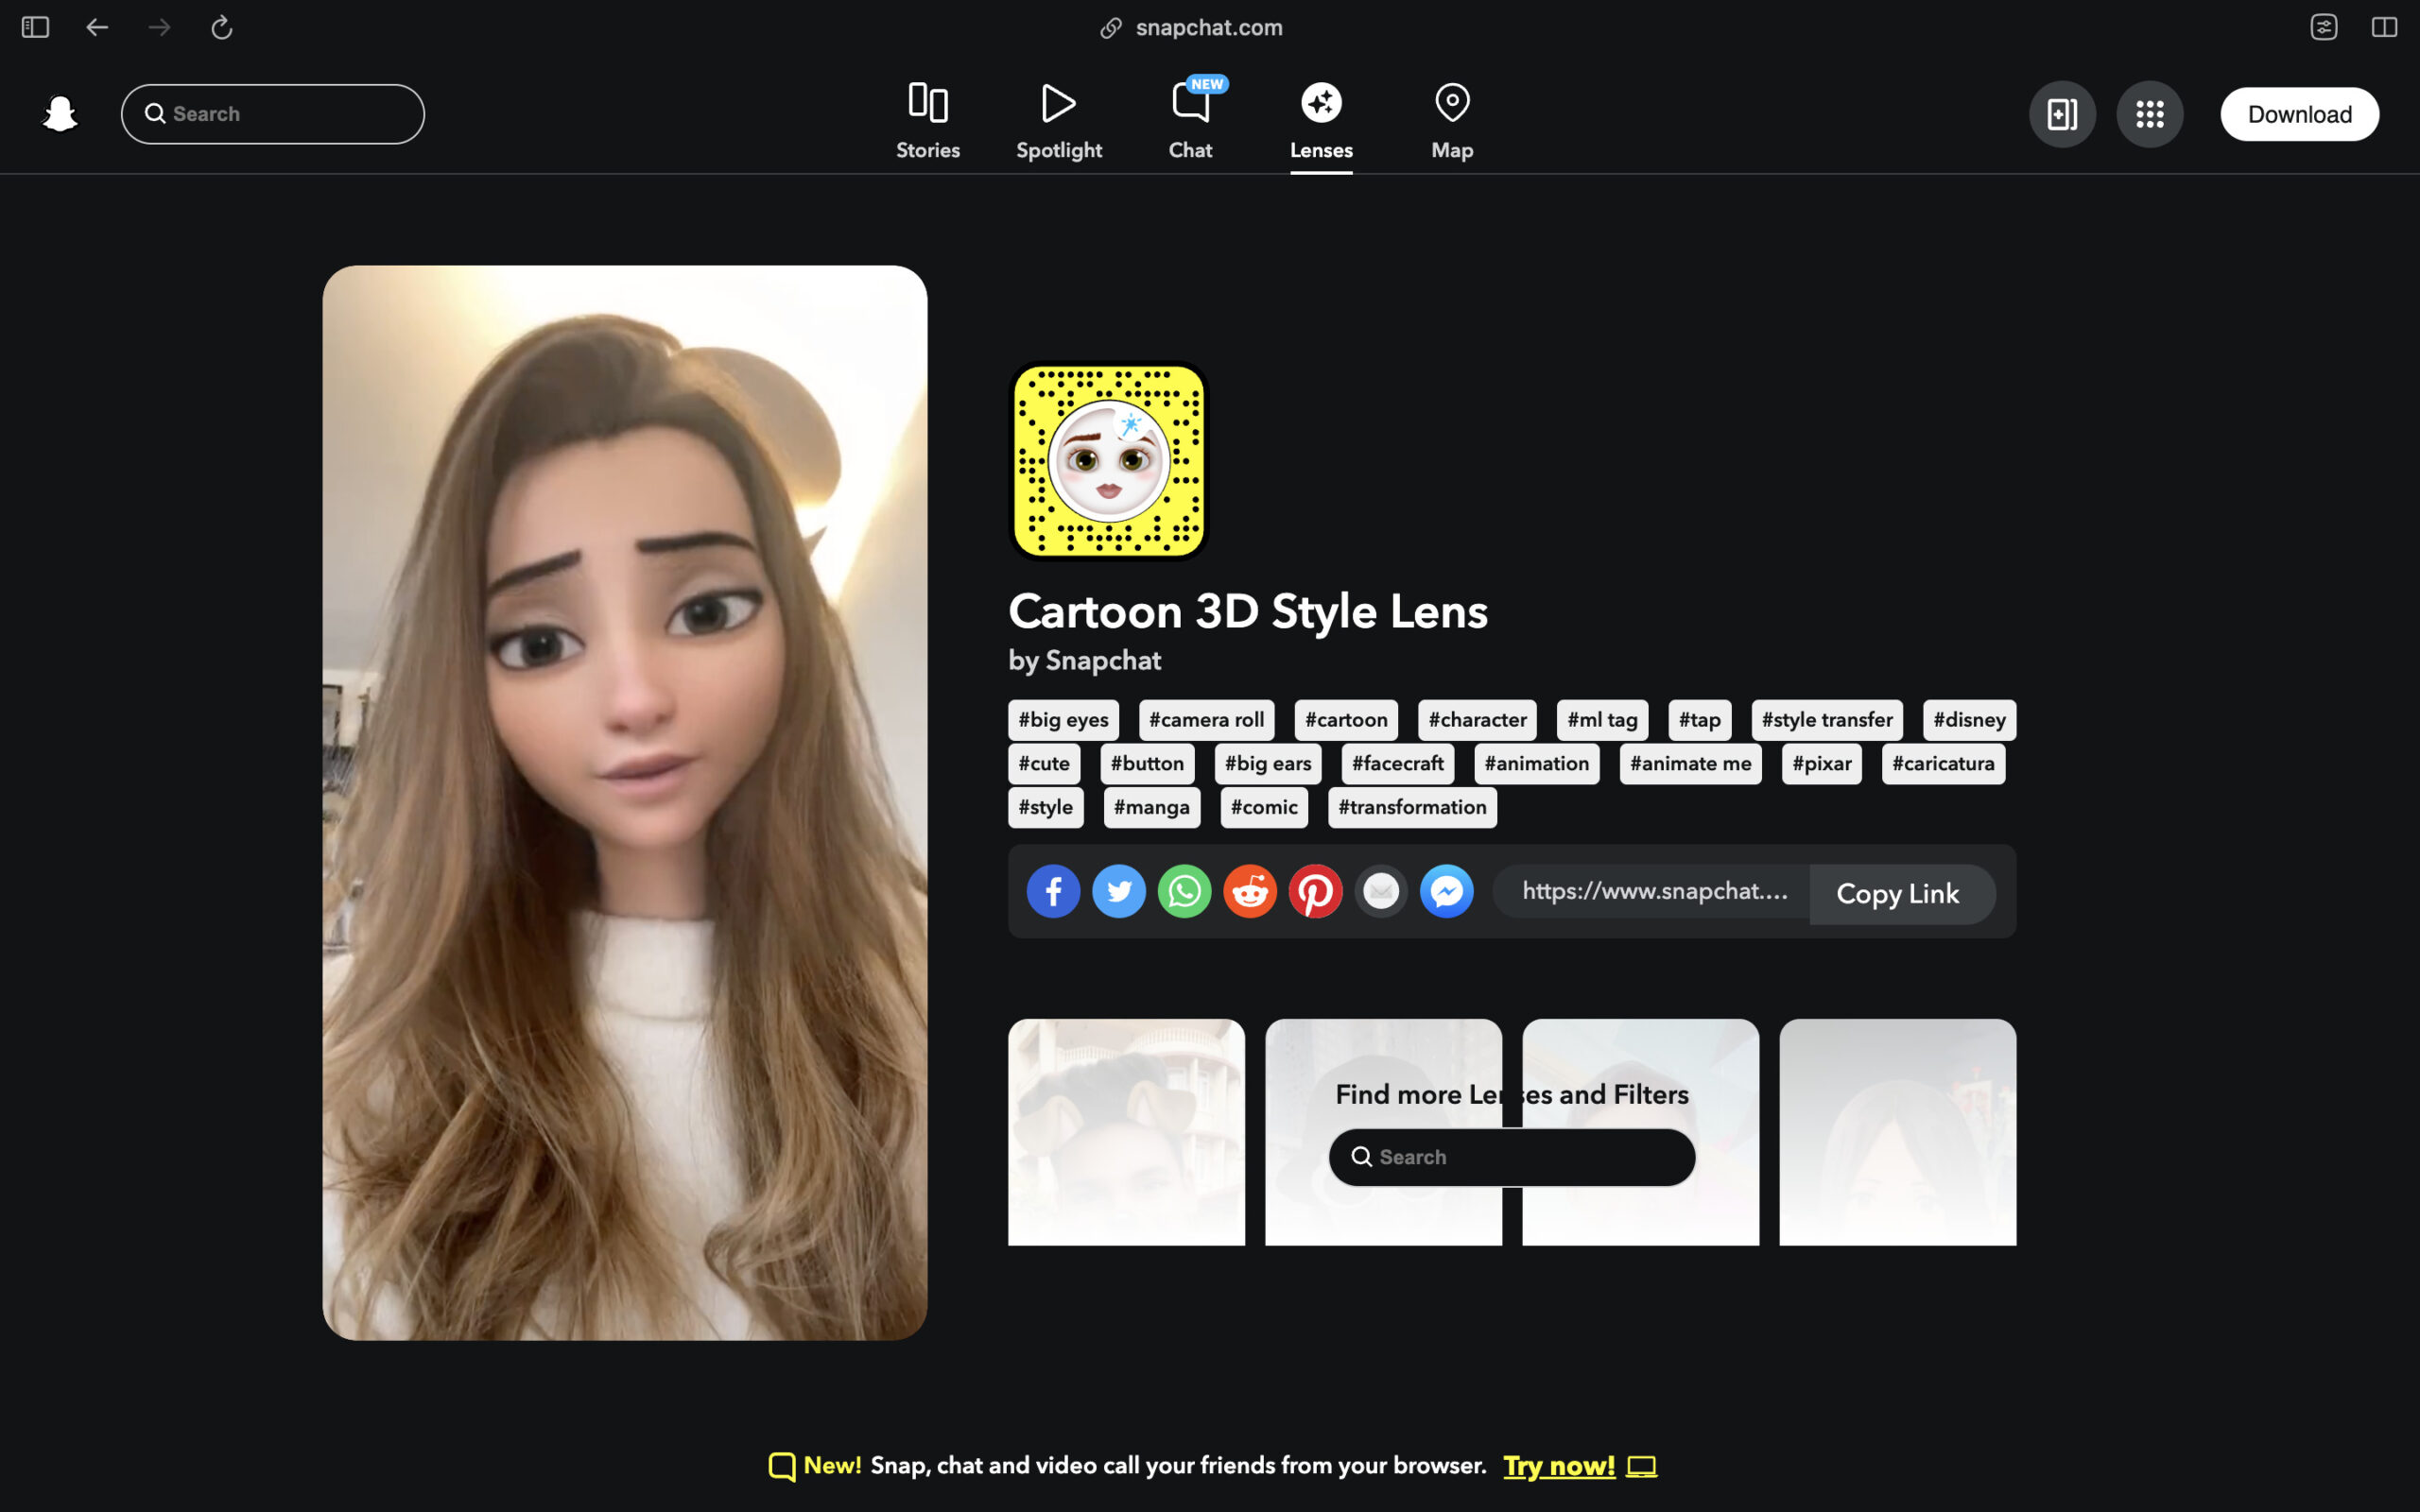 Send a Snap with the cartoon face lens 3D Style